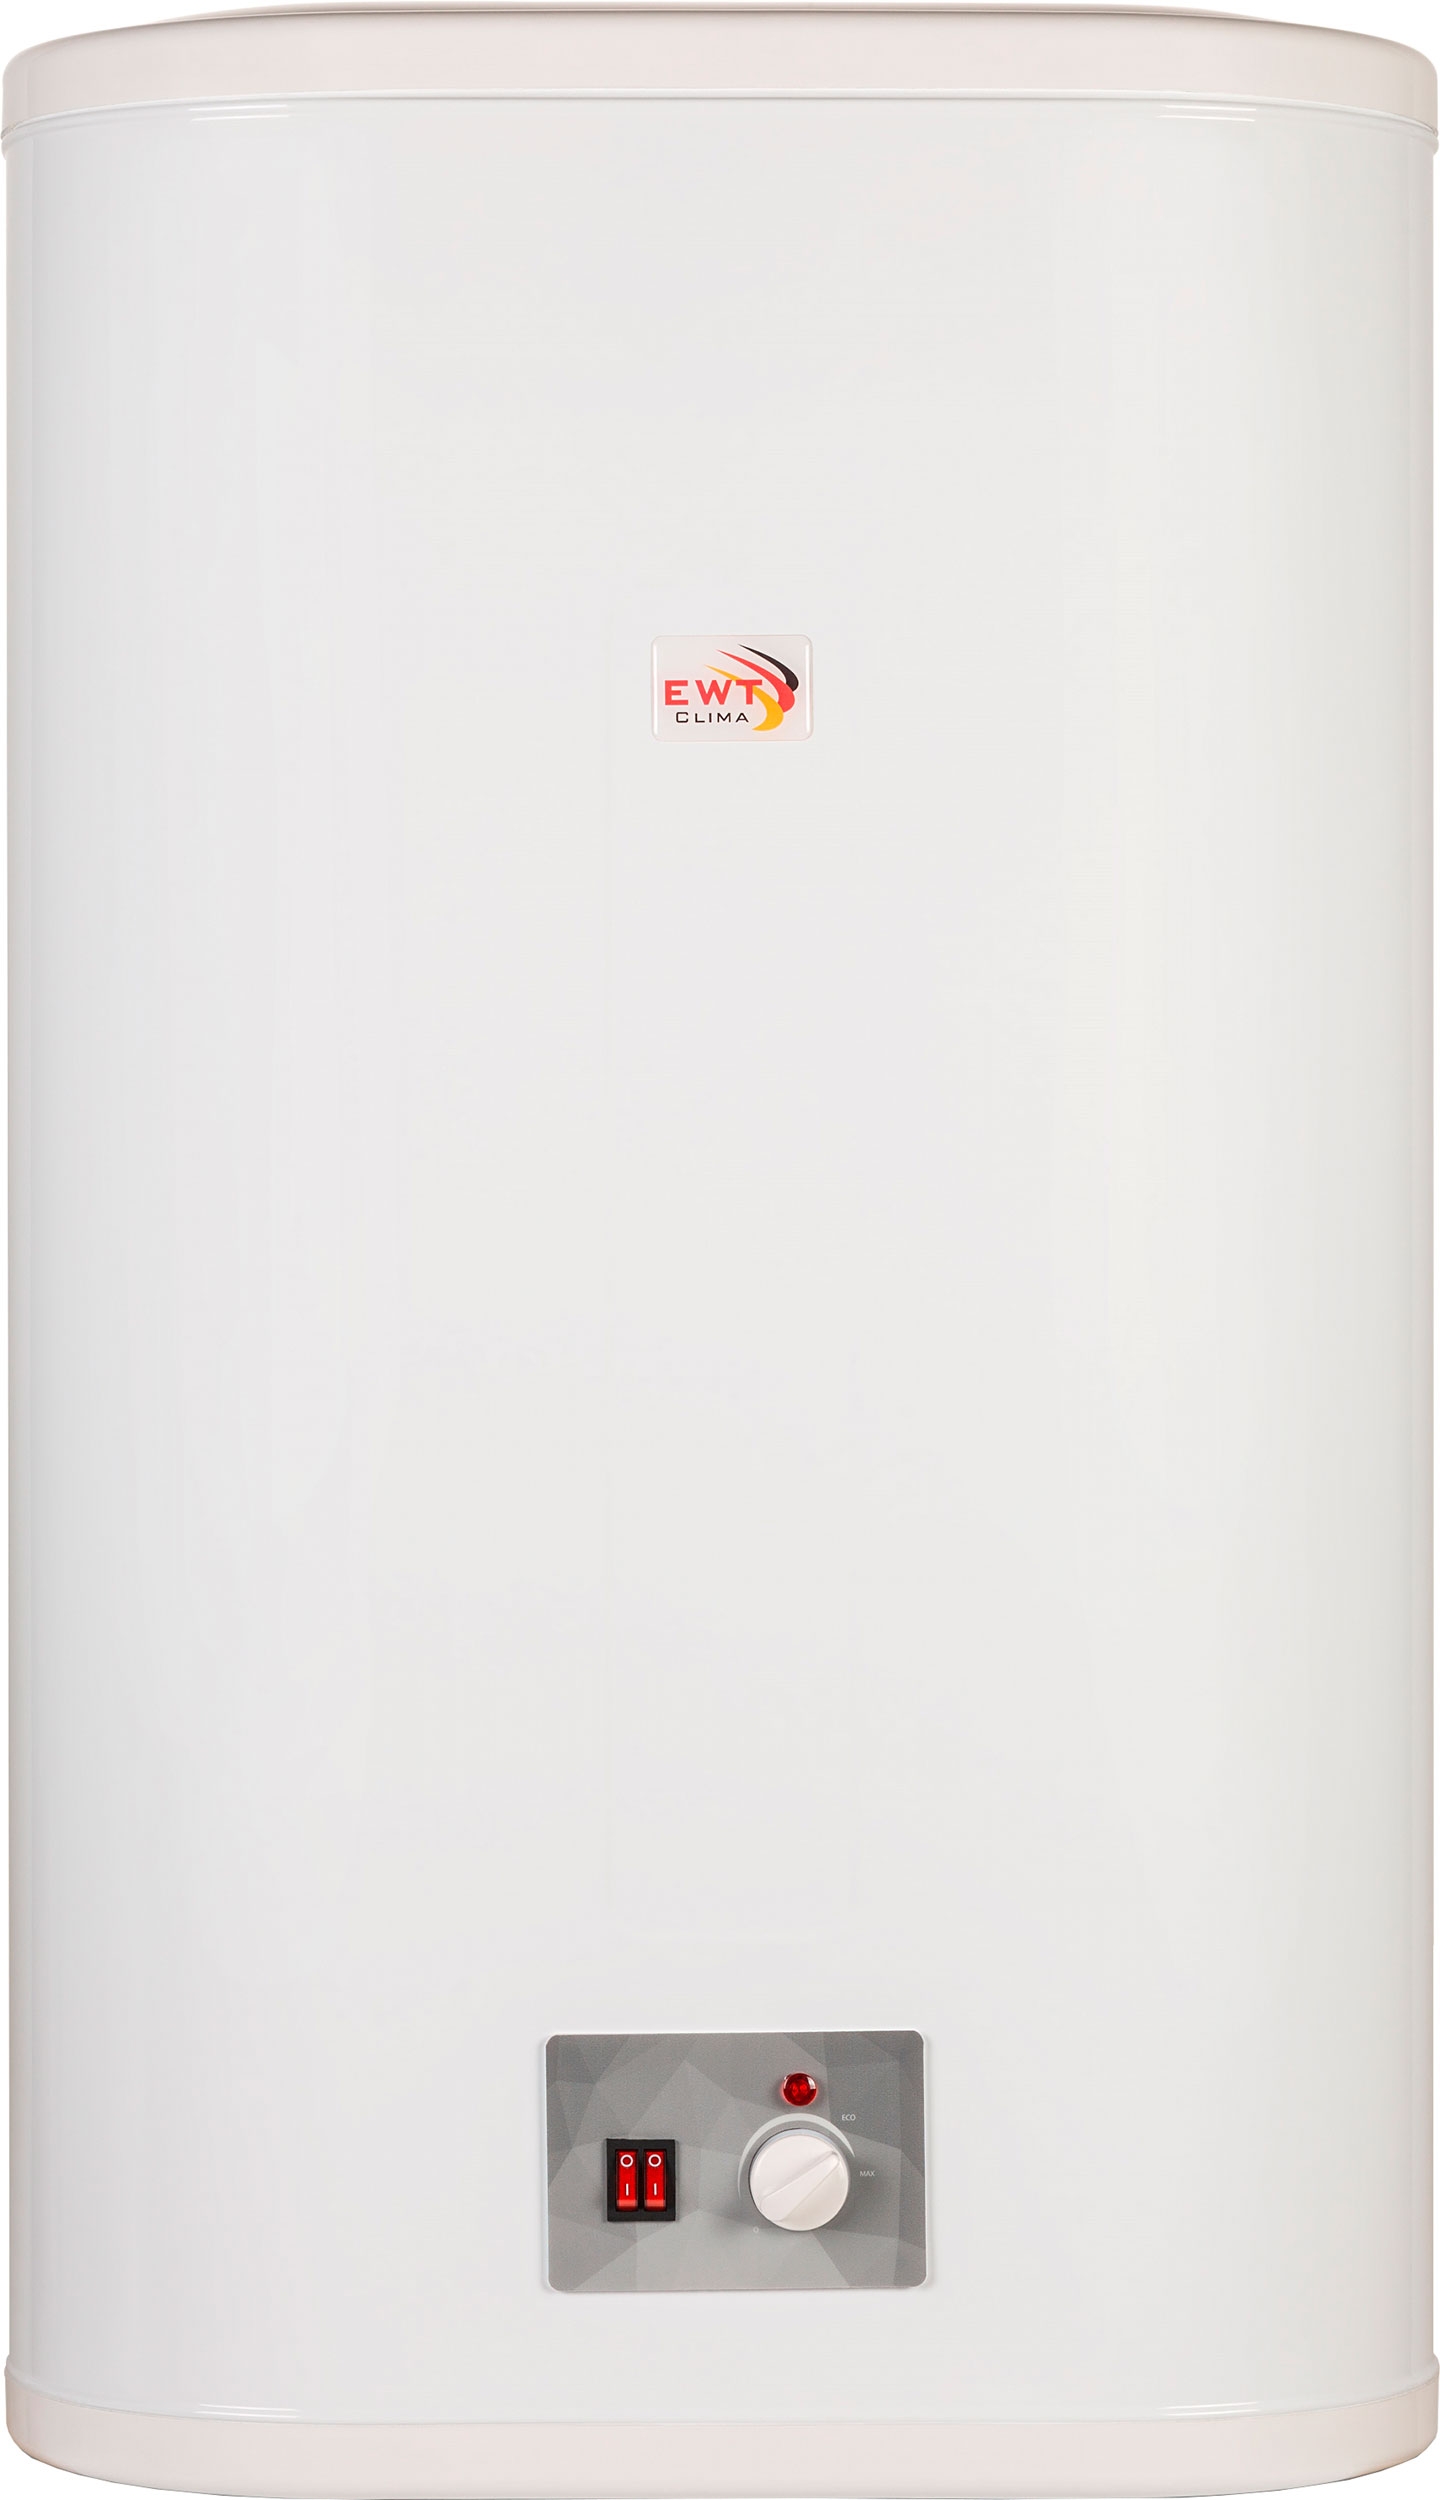 Бойлер EWT Clima Flach Dry AWH/M 100 в интернет-магазине, главное фото